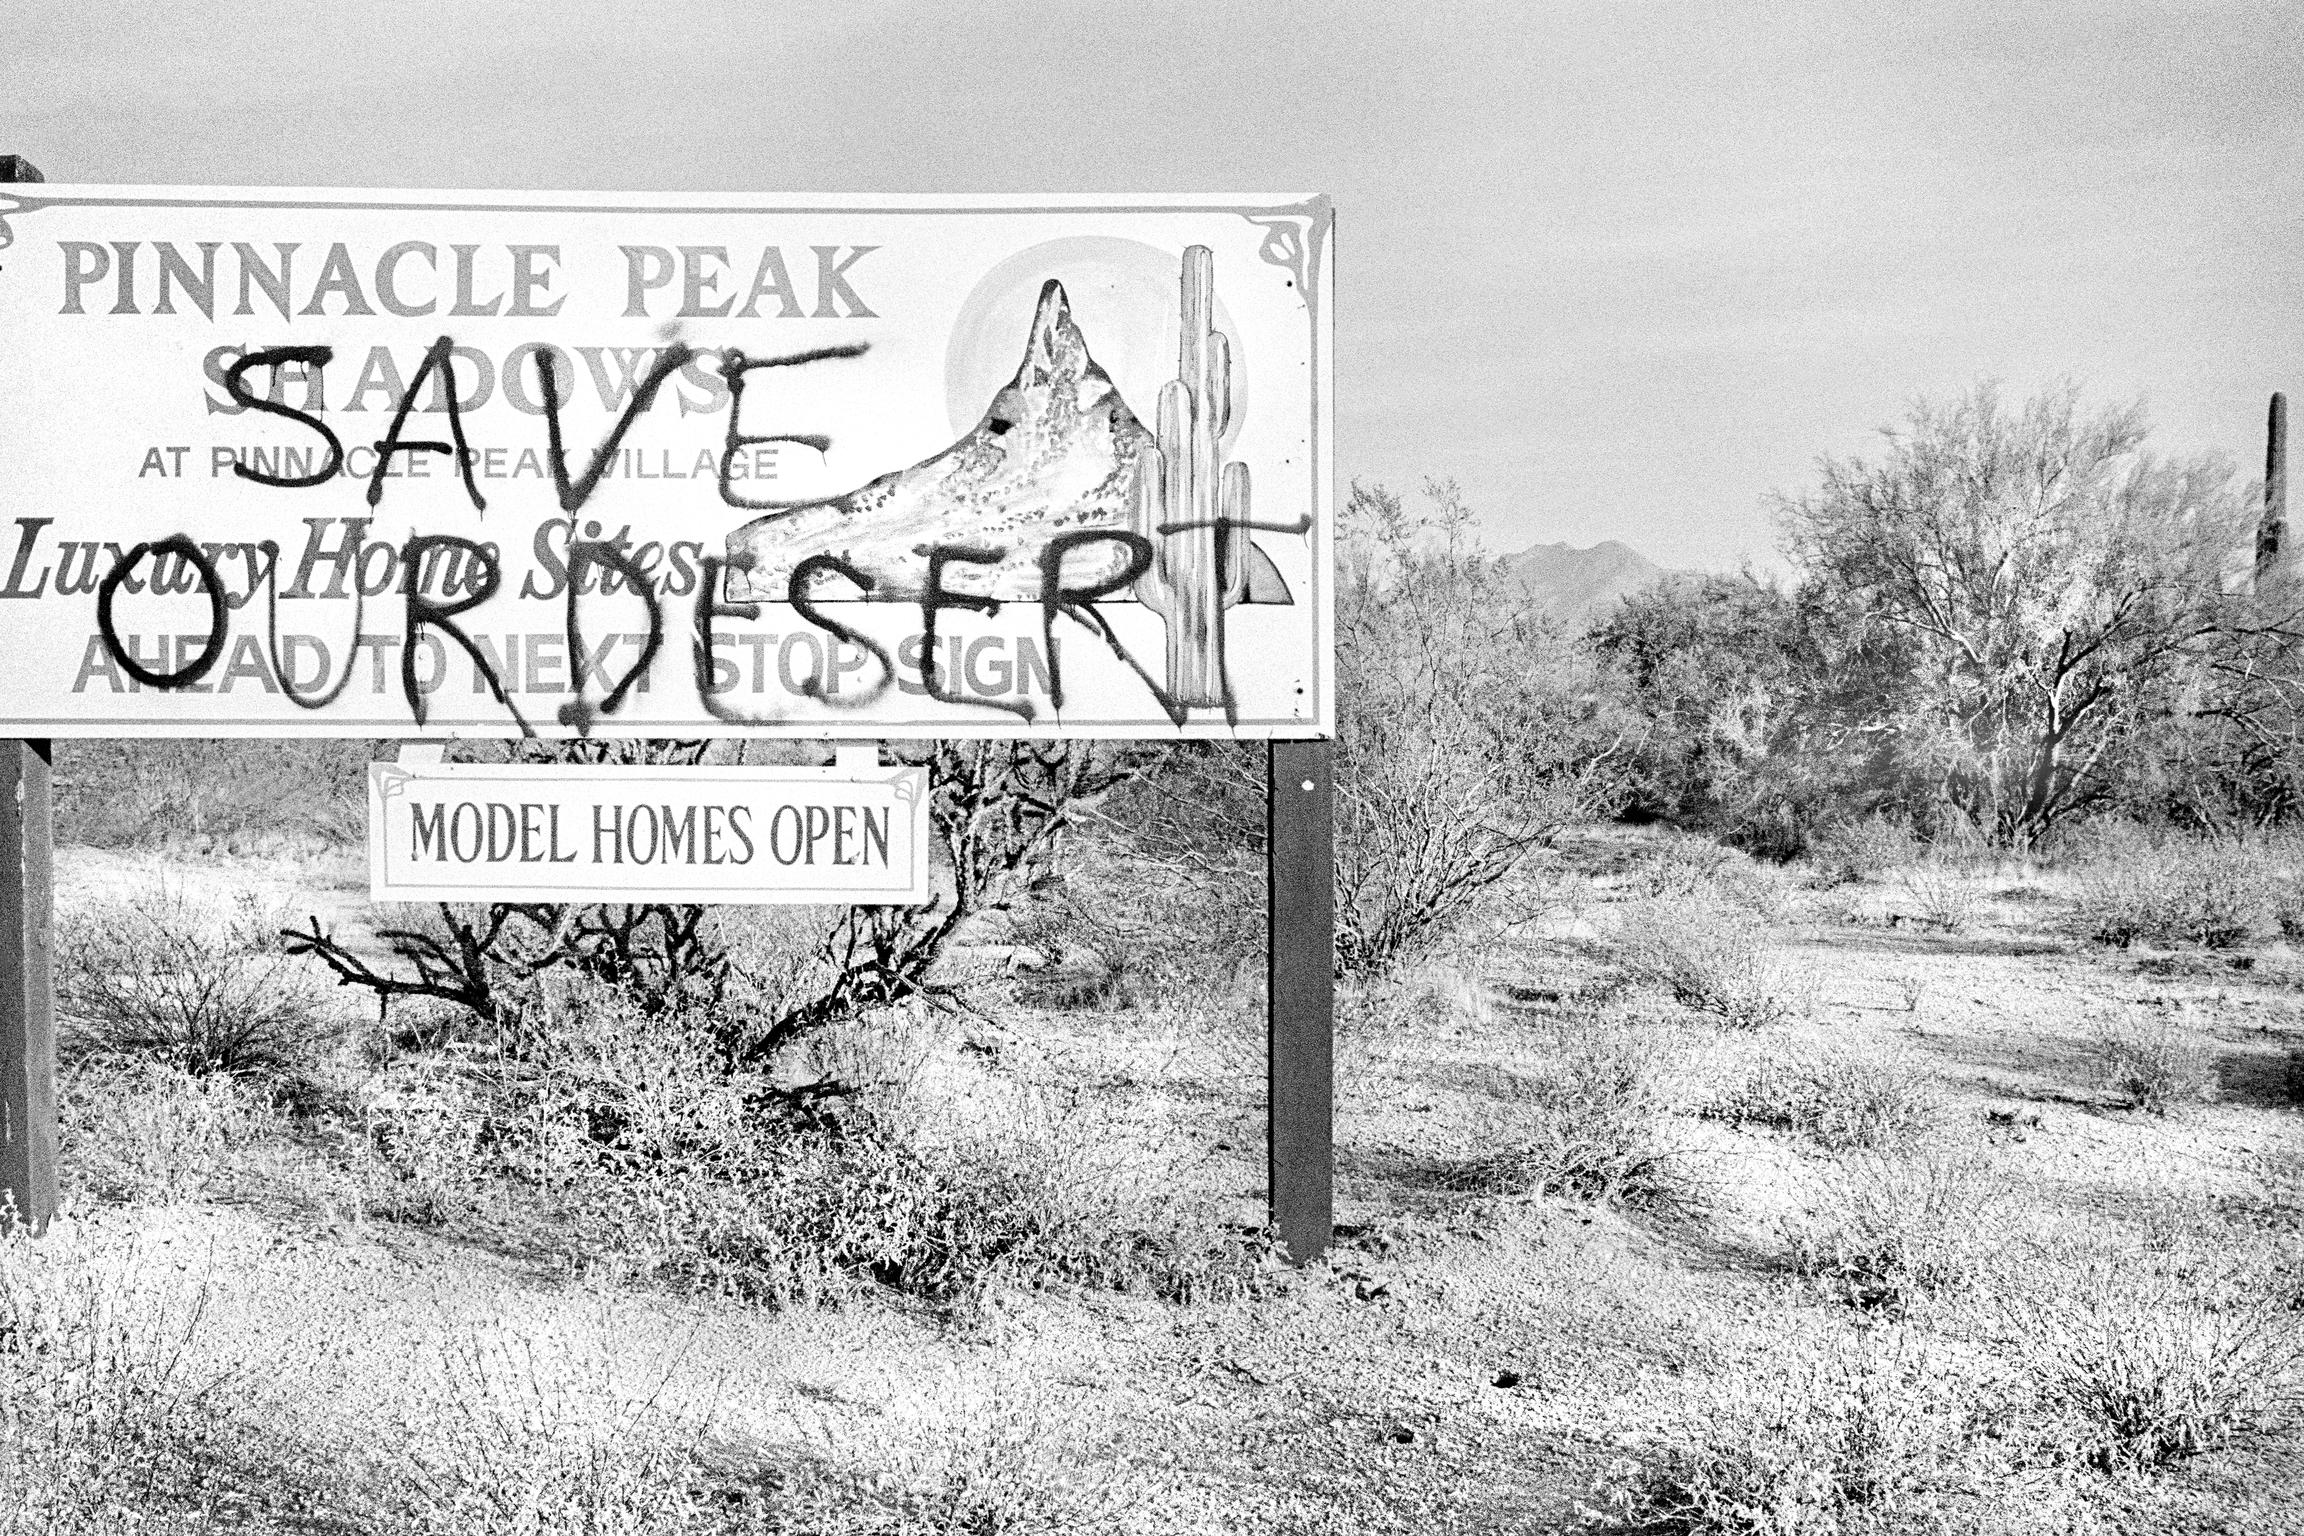 South Phoenix desert landscape. Arizona has a strong conservation movement